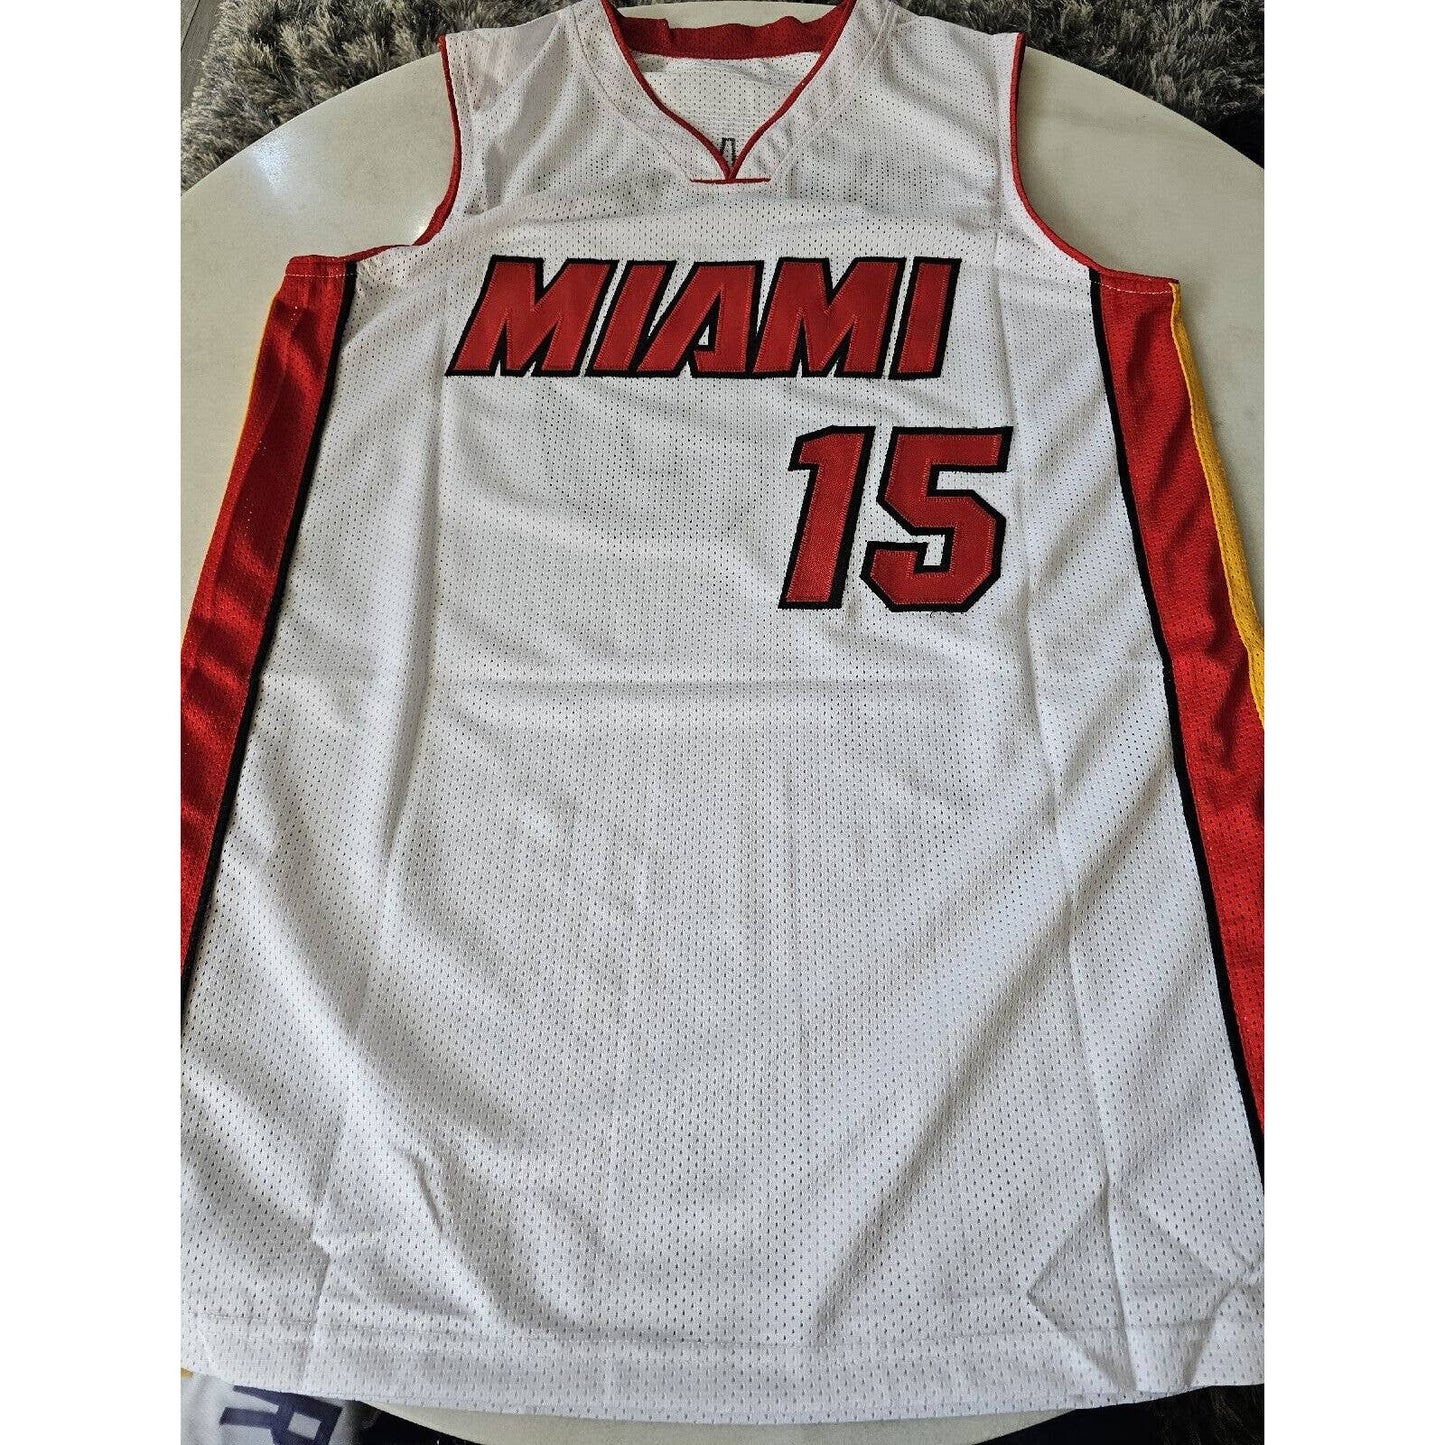 Mario Chalmers Autographed/Signed Jersey JSA COA Miami Heat